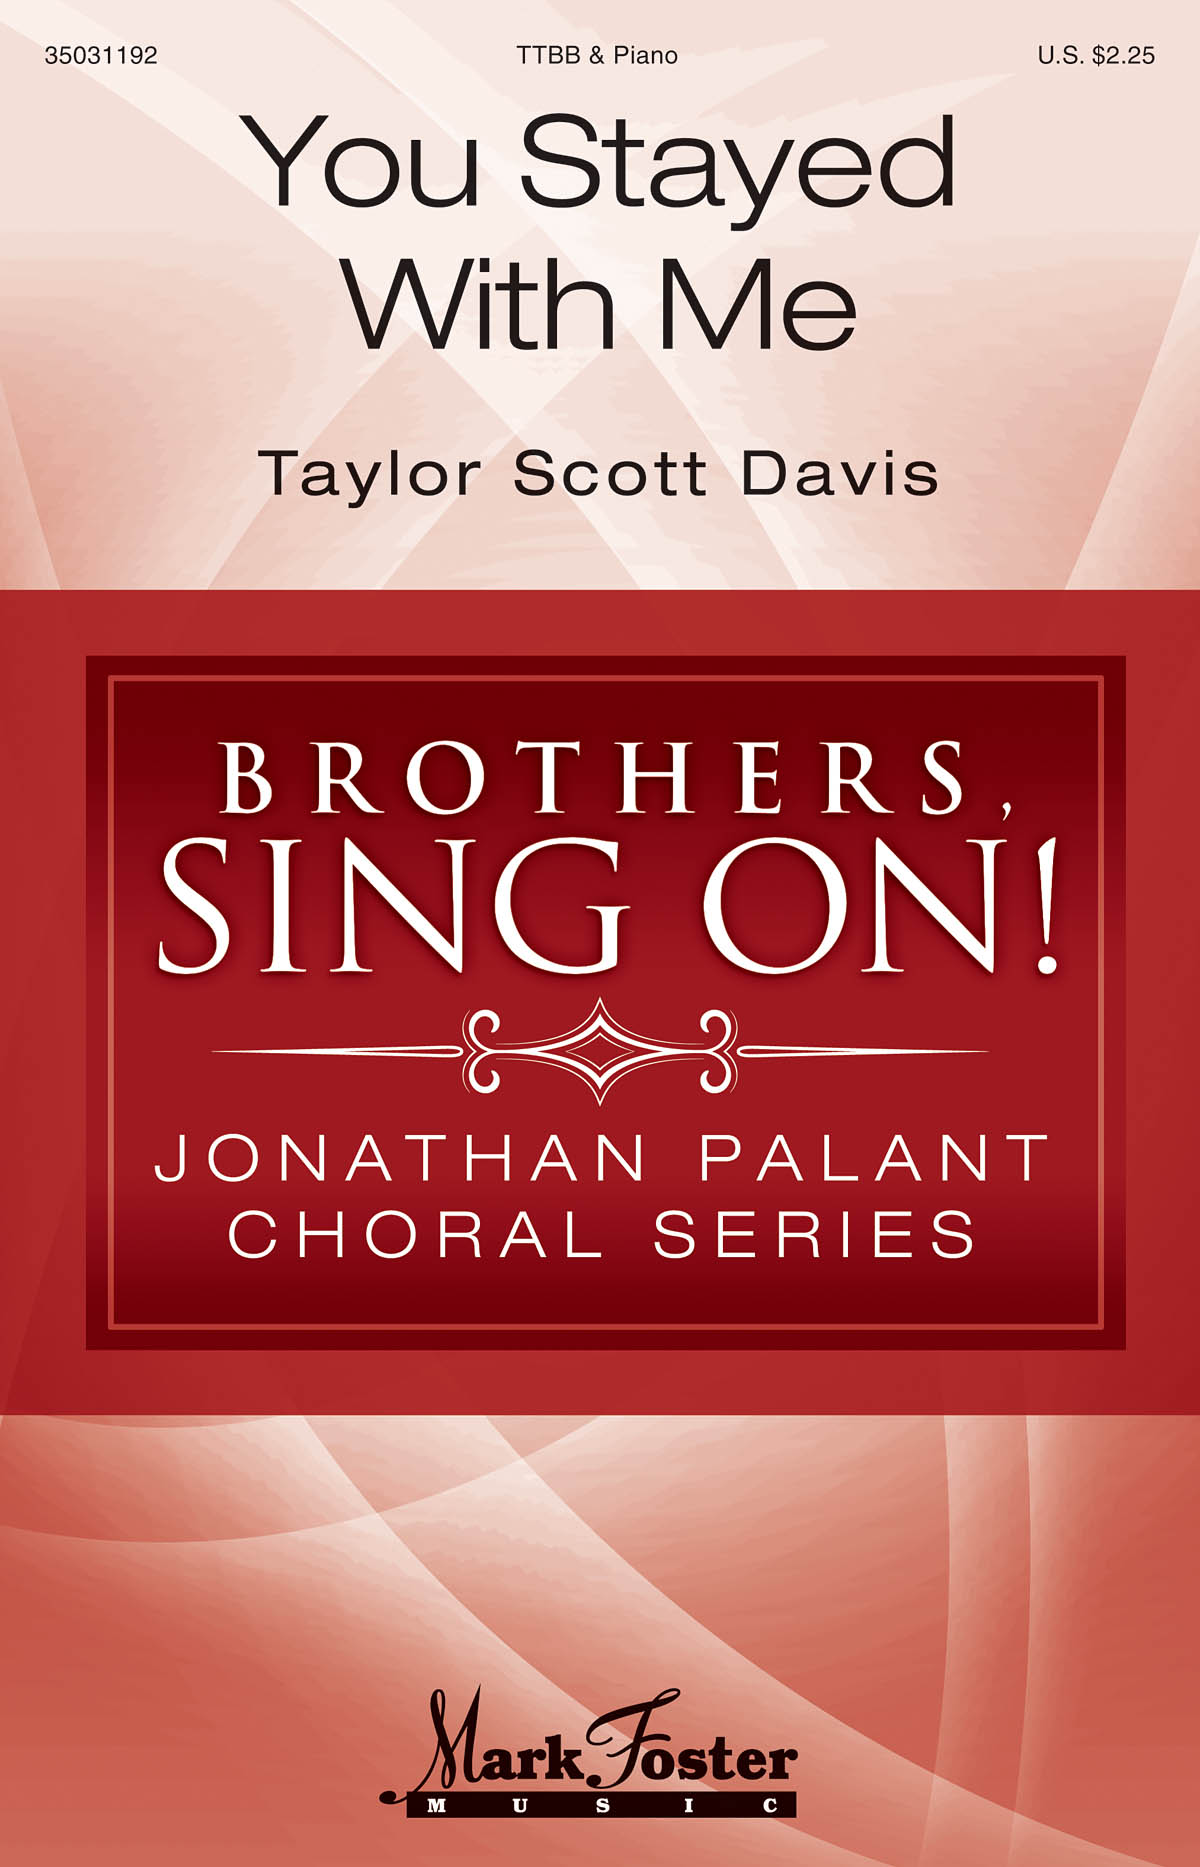 Taylor Scott Davis: You Stayed with Me: TTBB: Vocal Score